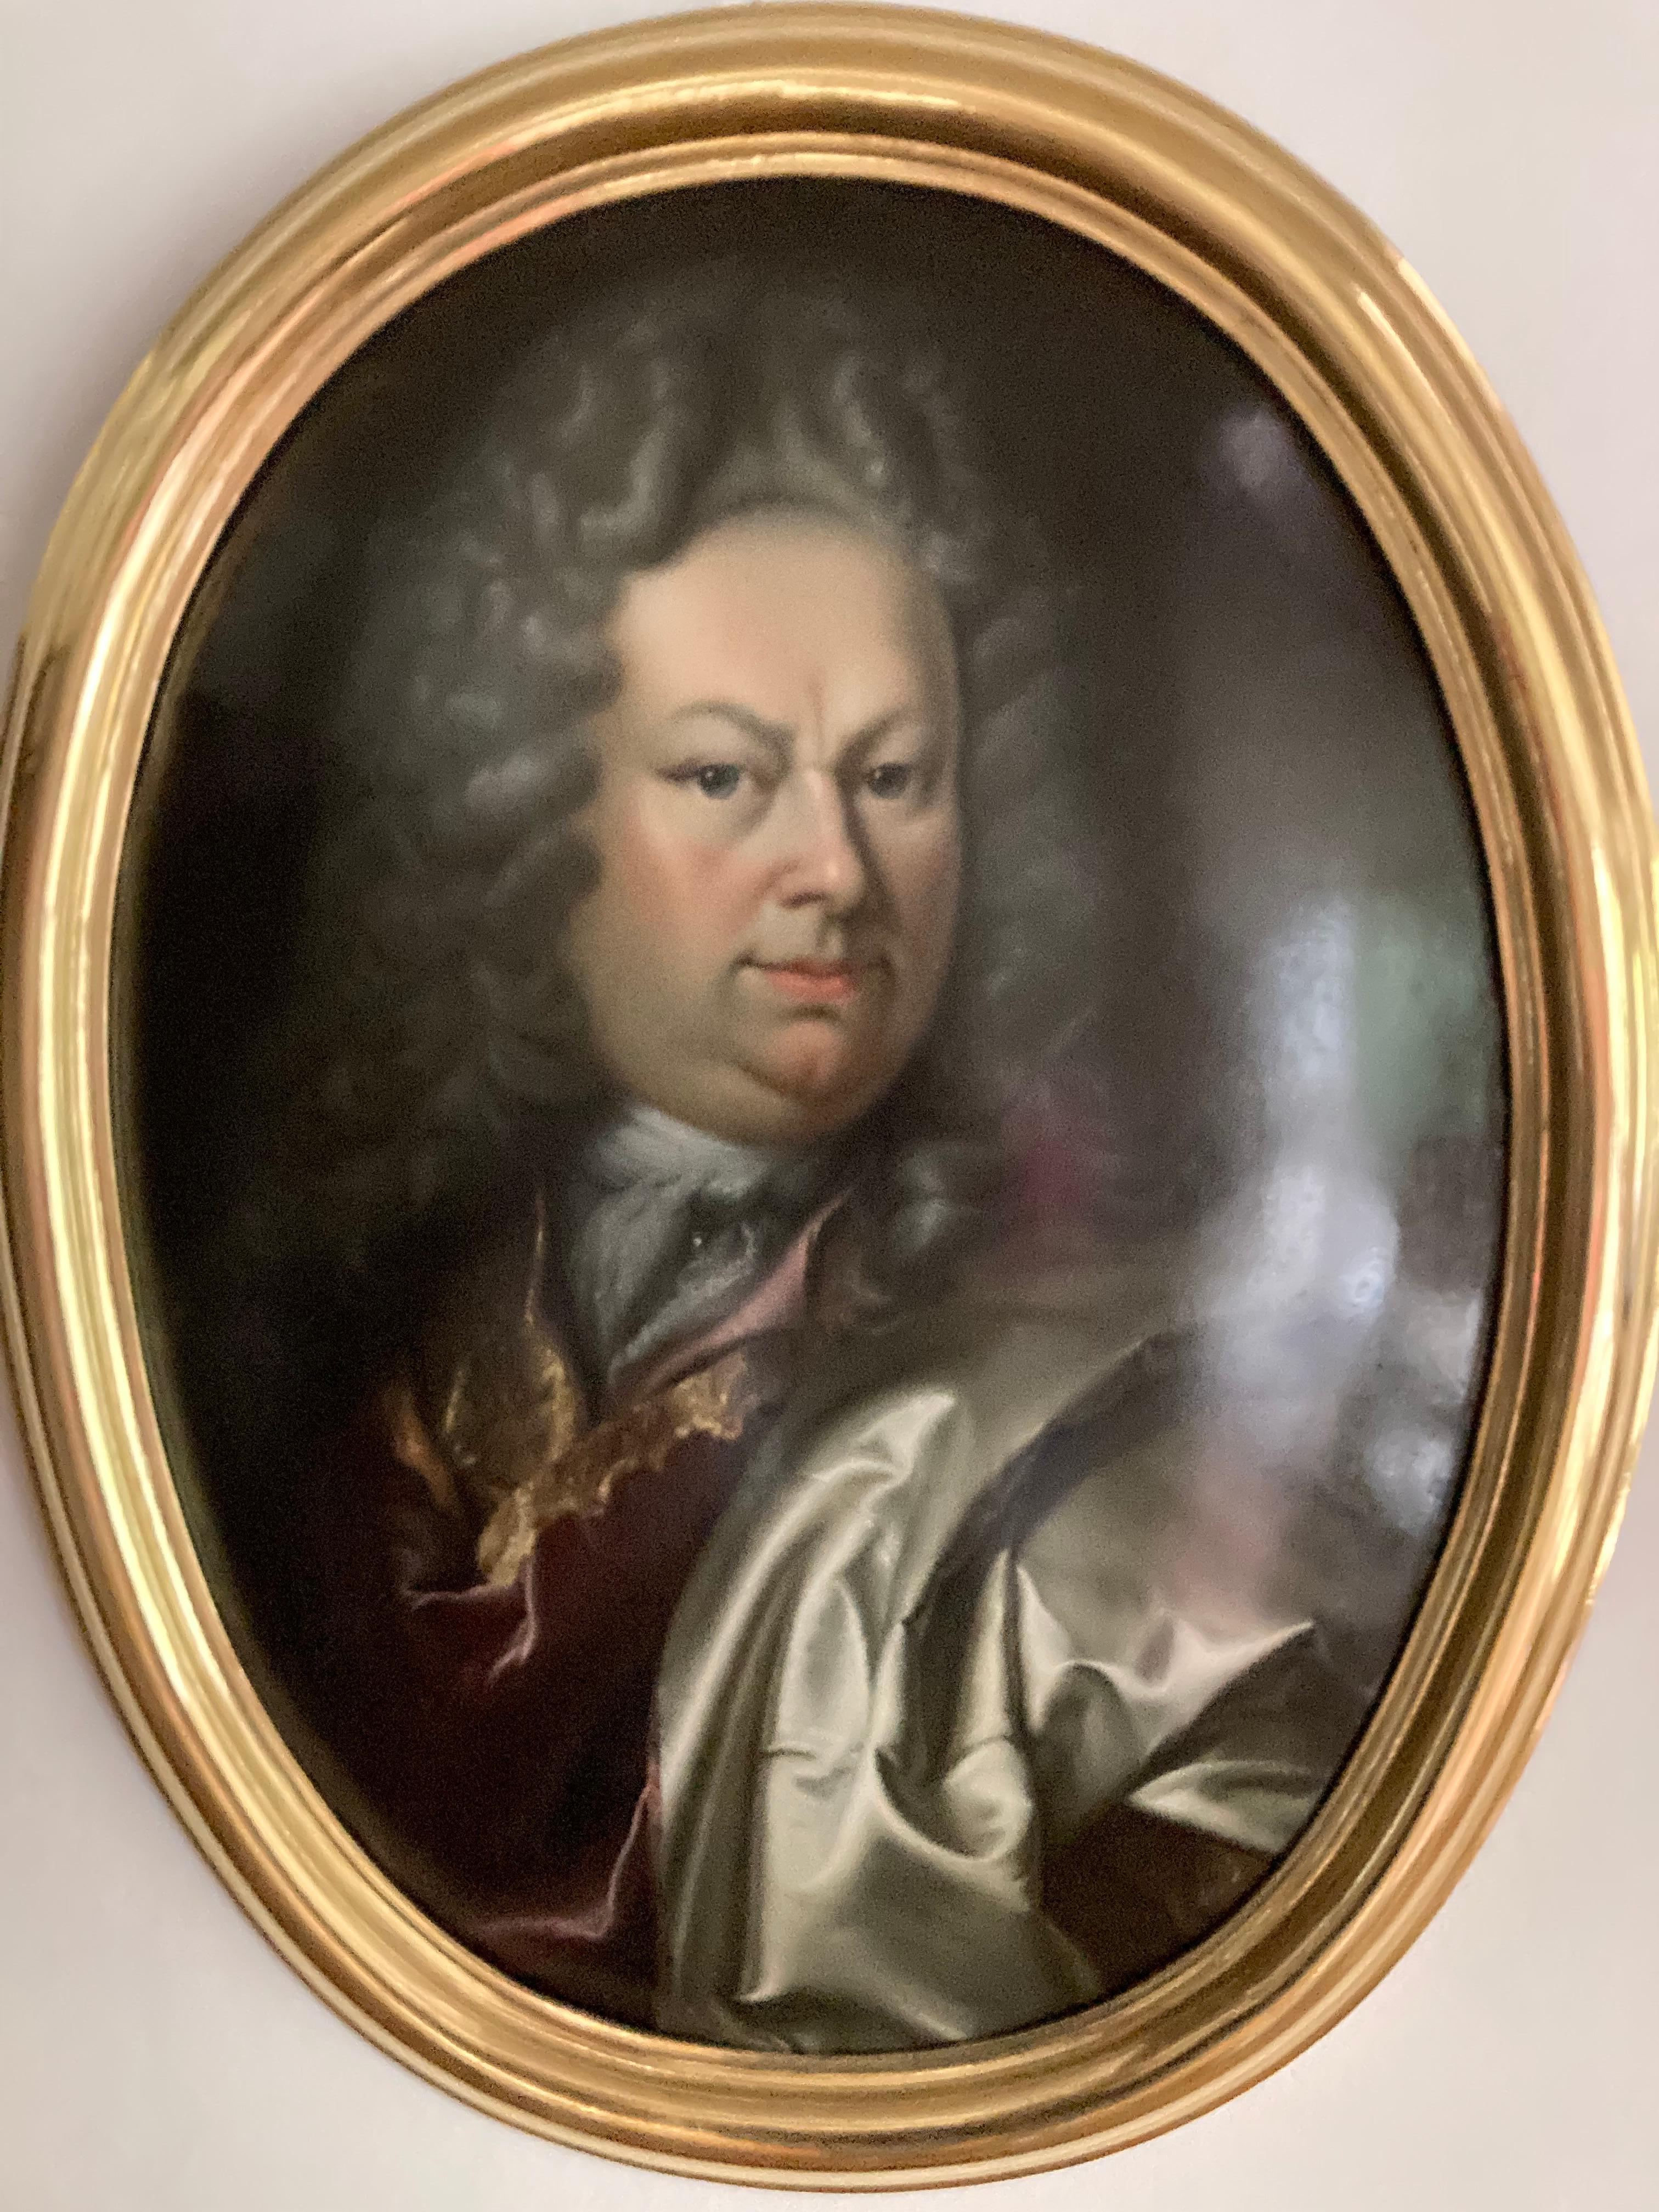 Portrait of a Gentleman, Halung, Court Painter Schildbach, Gotha, Convex Copper For Sale 1